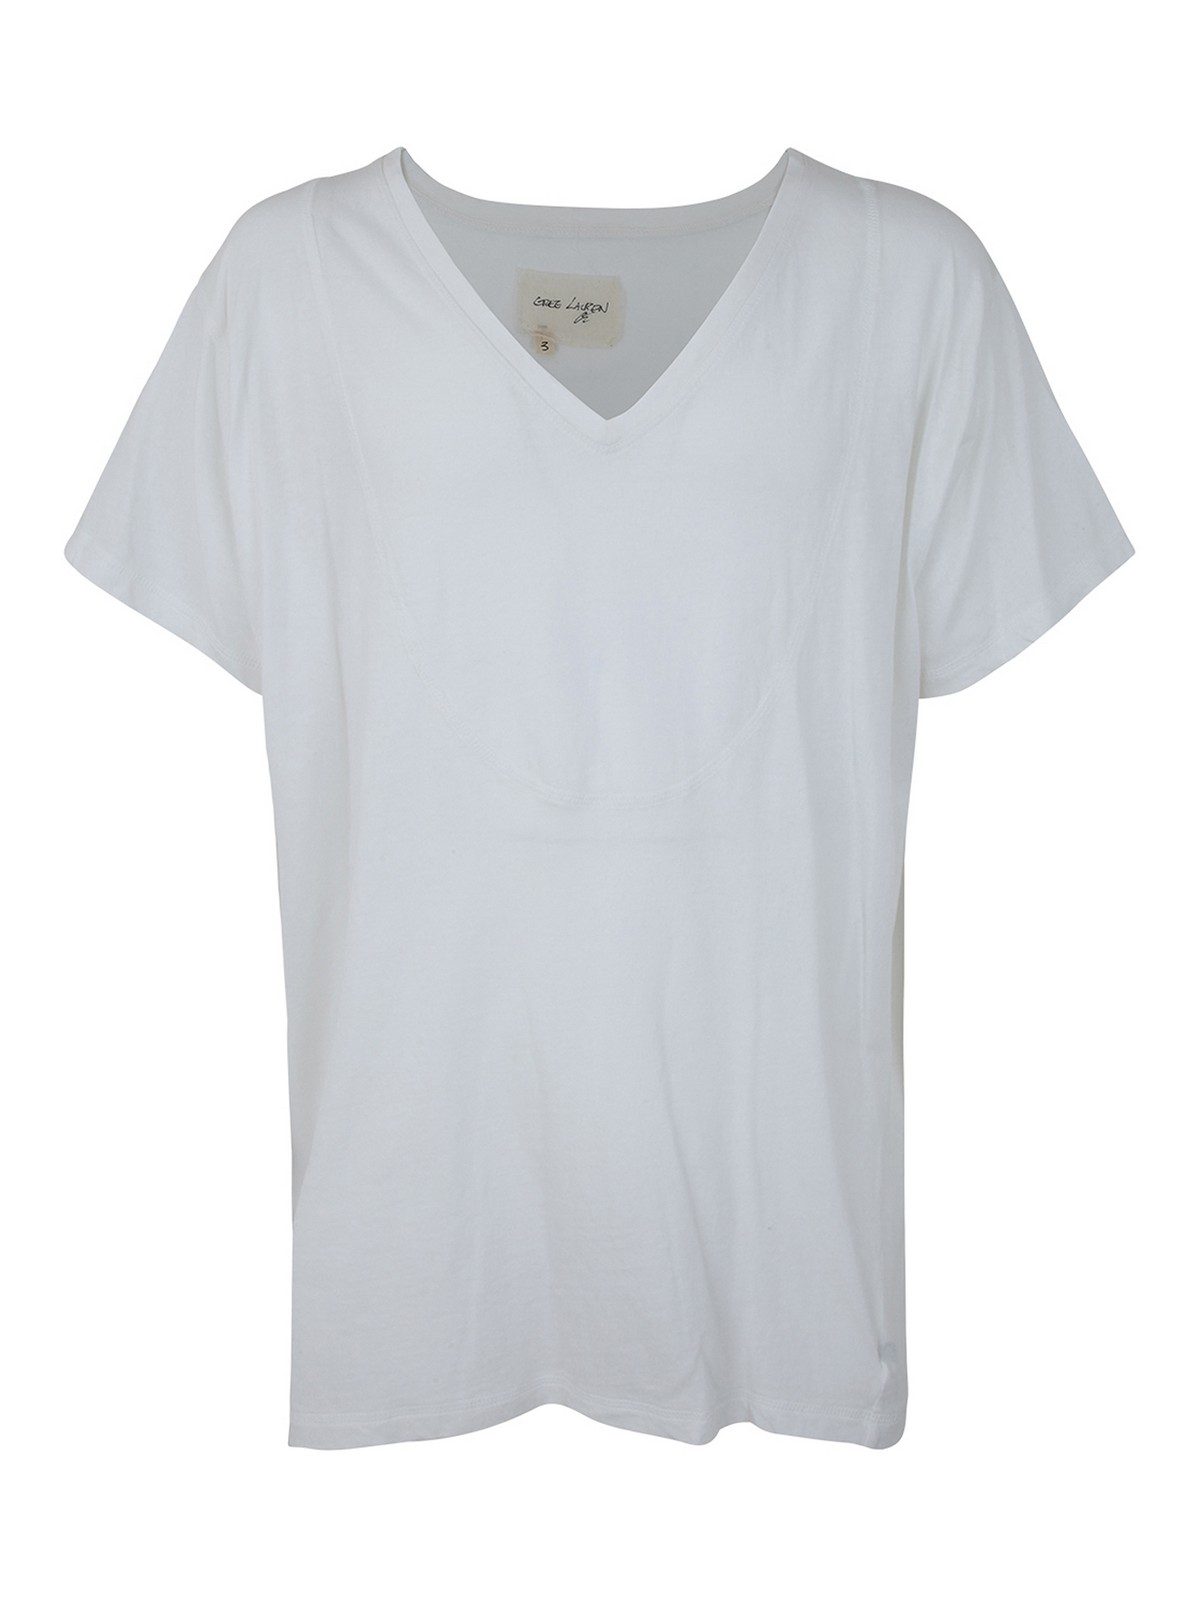 Tシャツ Greg Lauren - Tシャツ - 白 - FM172WHITE | THEBS